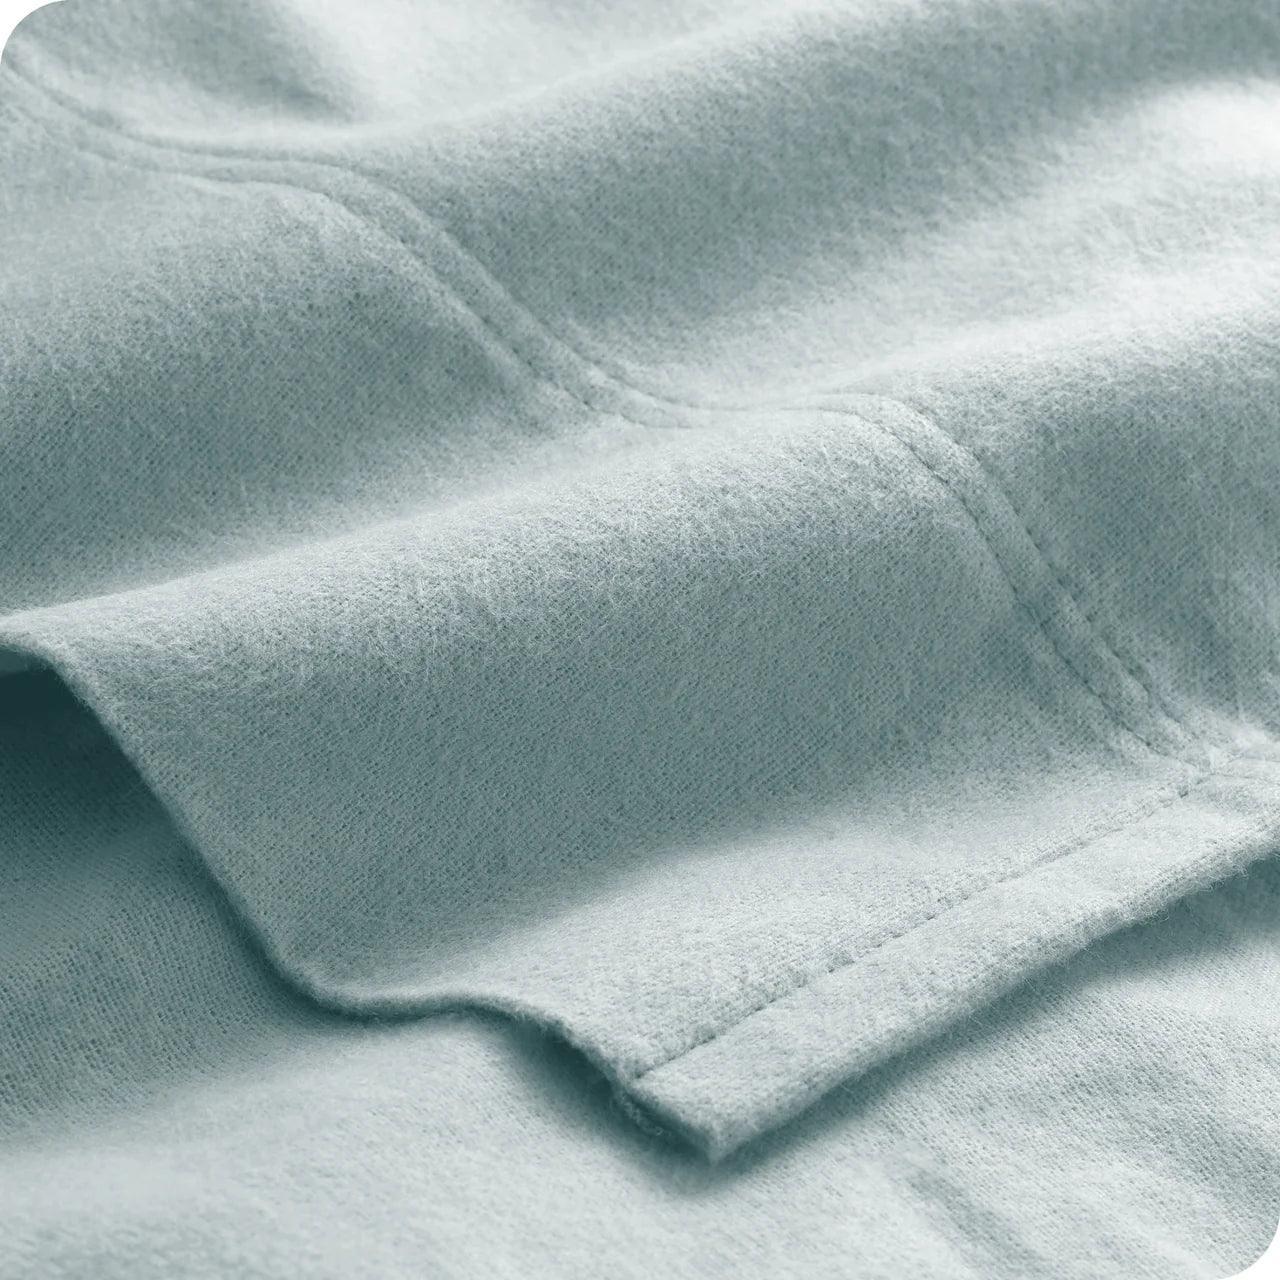 Split Flex Top King Sheets No Tear Flannel 100% Cotton The Best Adjustable Bed Sheets CinchFit USA Sheets